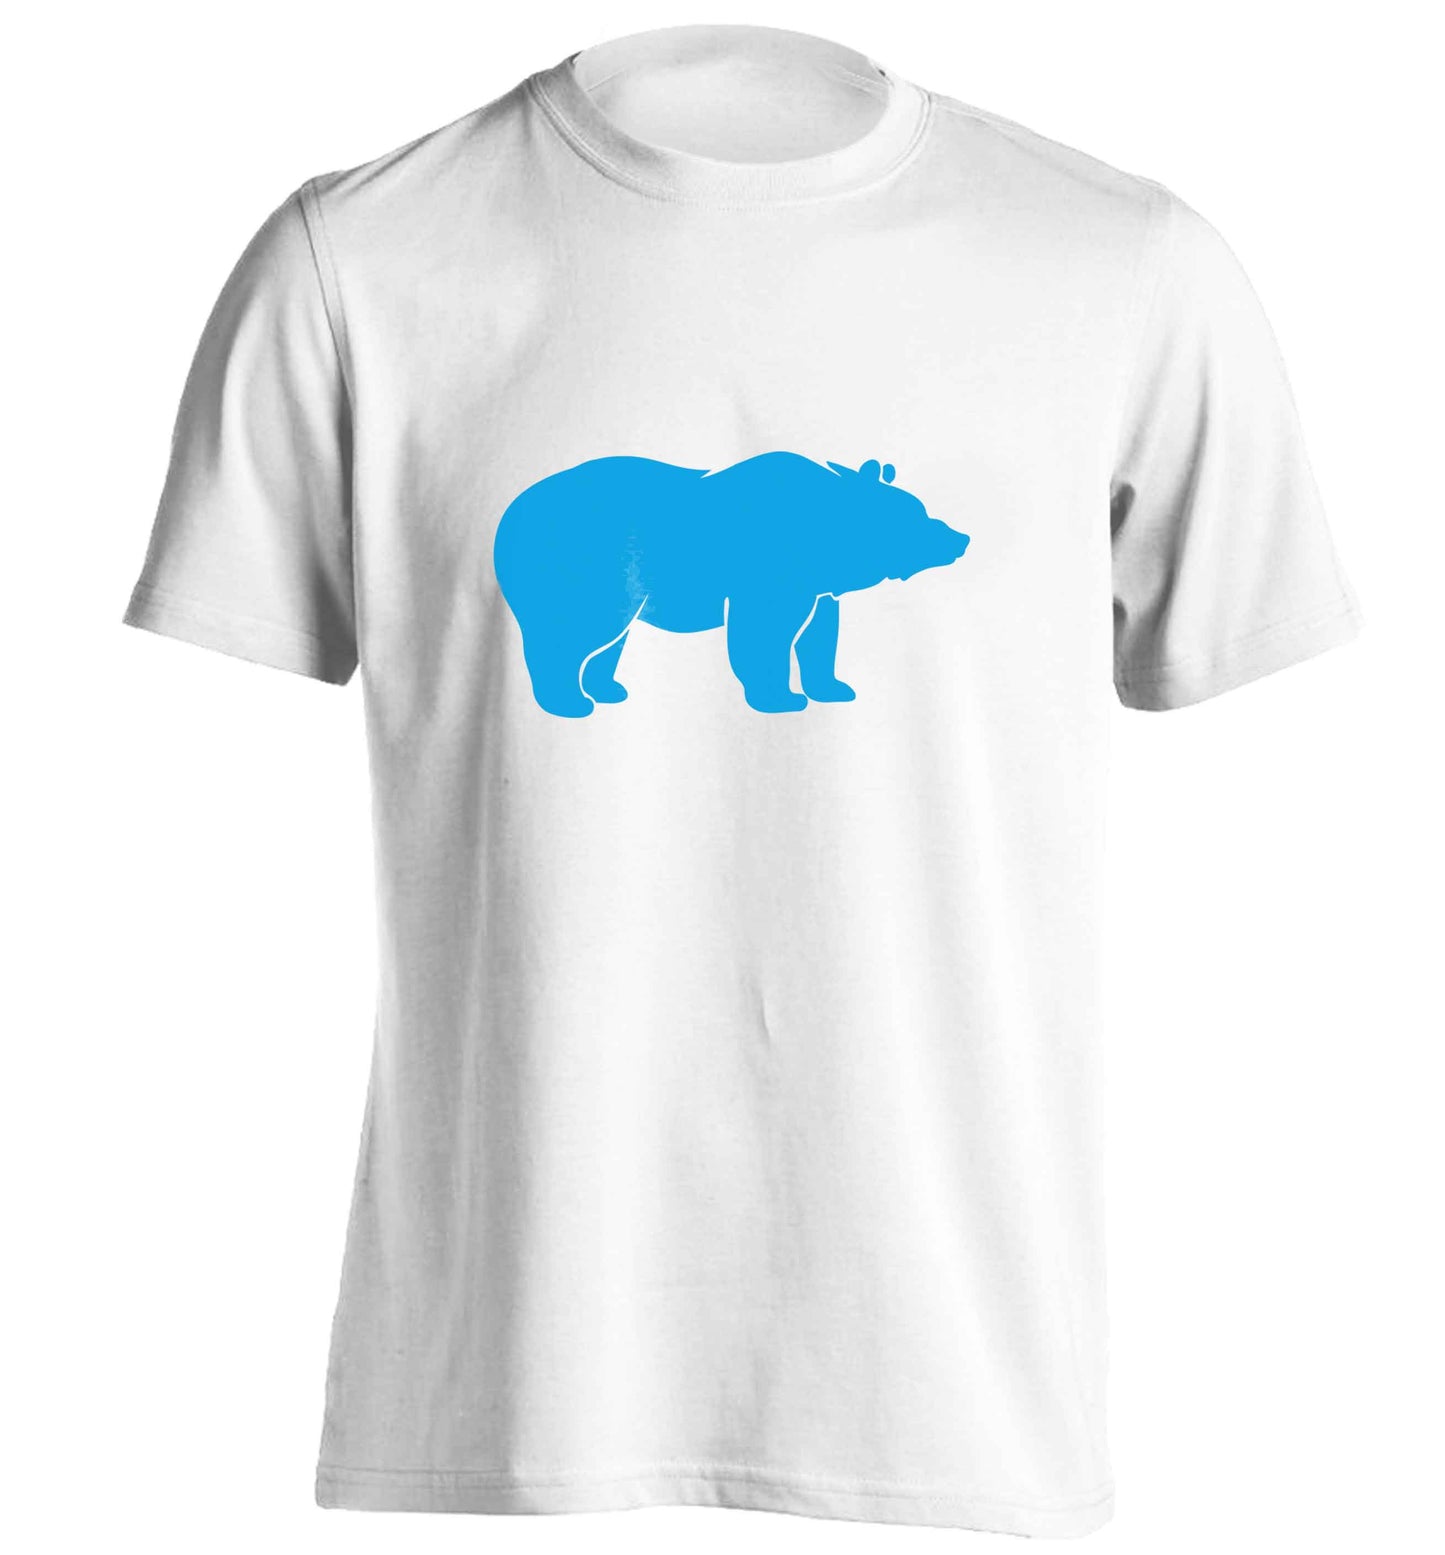 Blue bear adults unisex white Tshirt 2XL